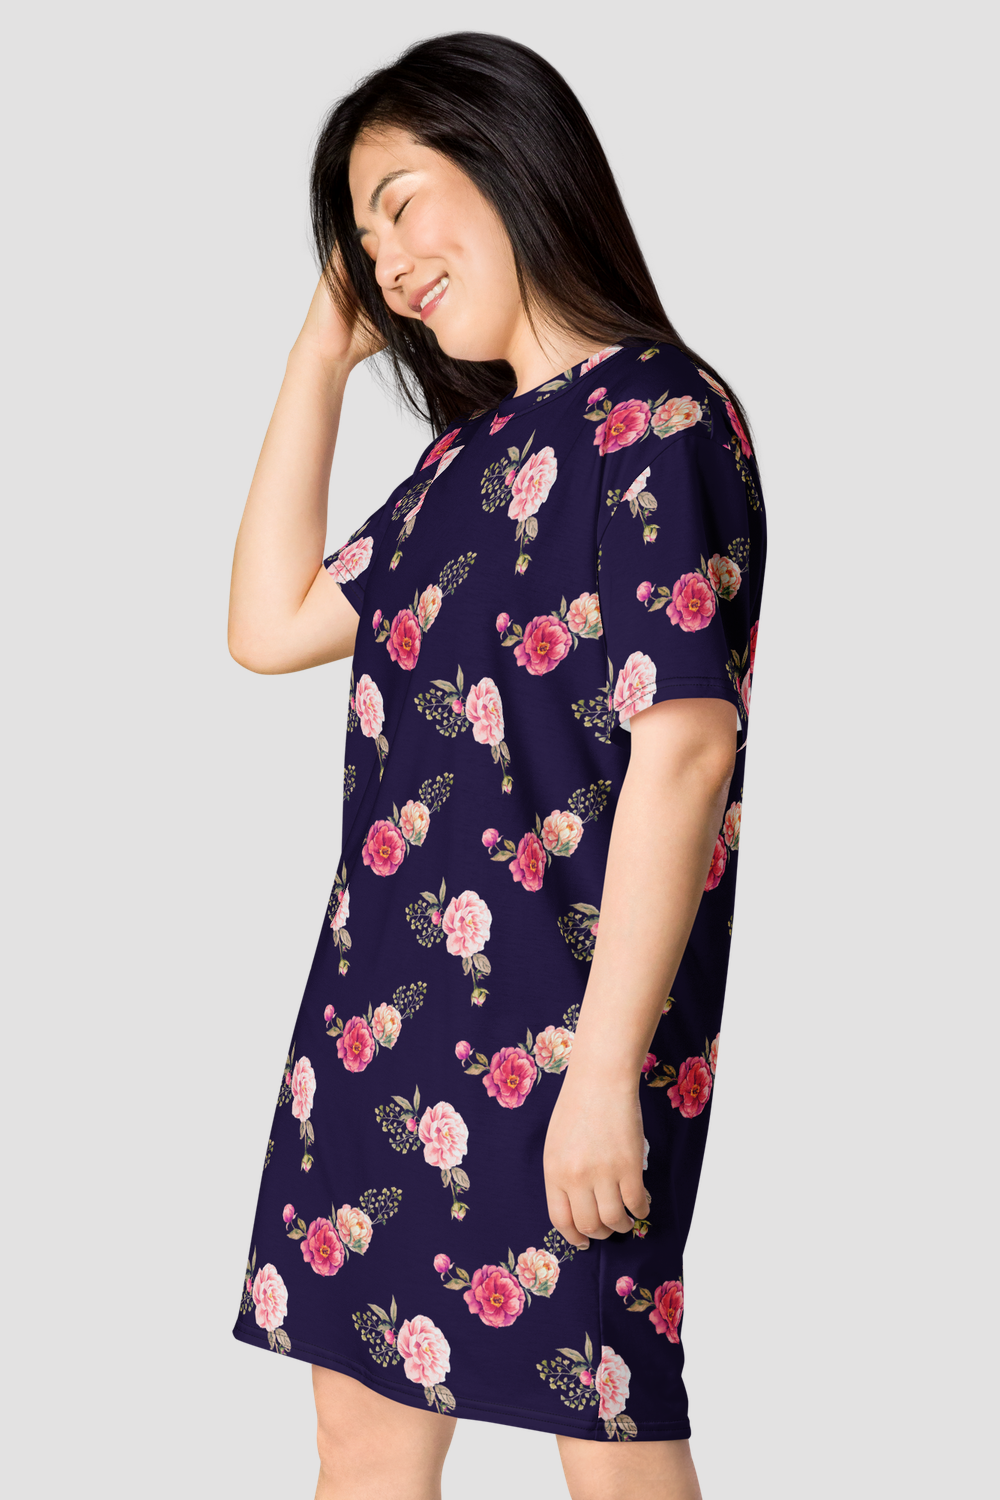 Rosie Plum Floral Watercolor Graphic Print T-Shirt Dress